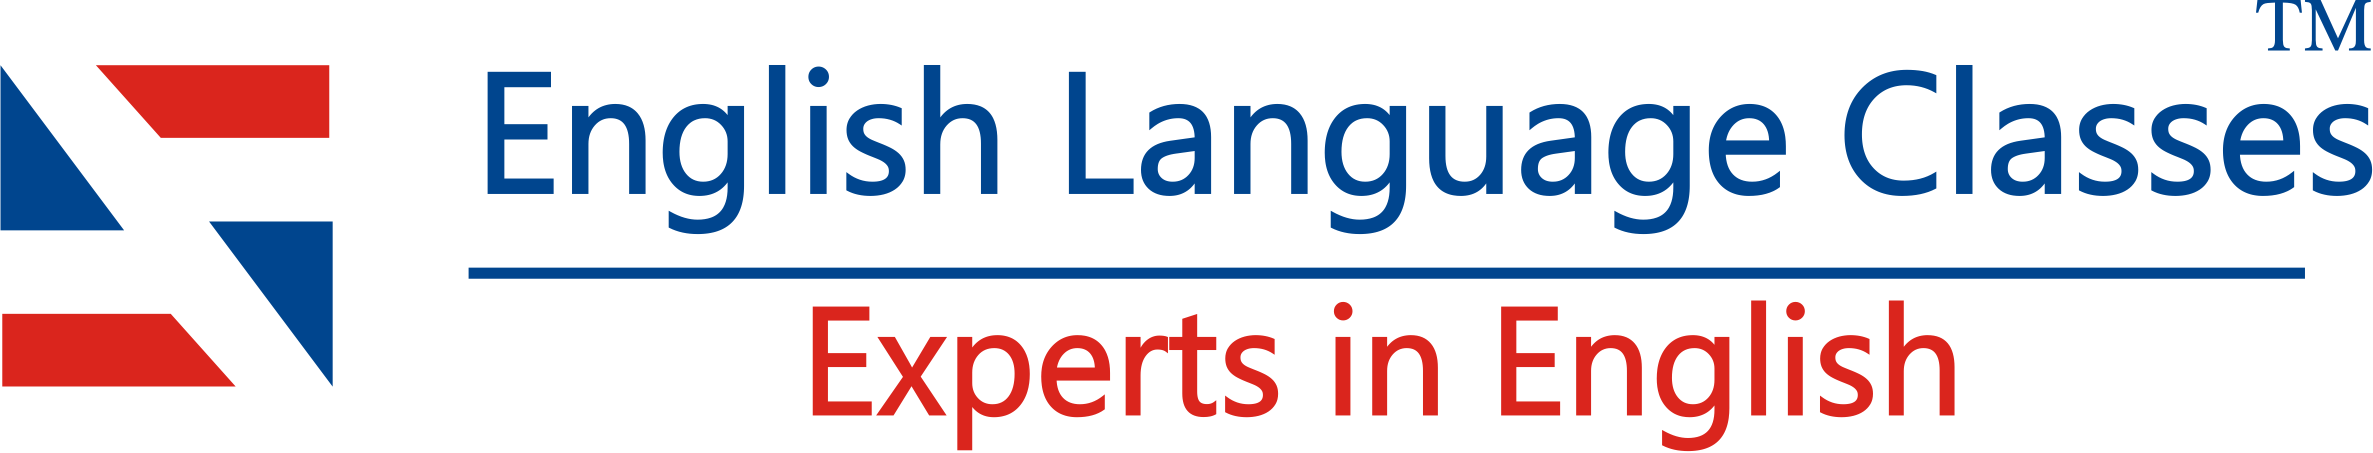 English Language Classes logo